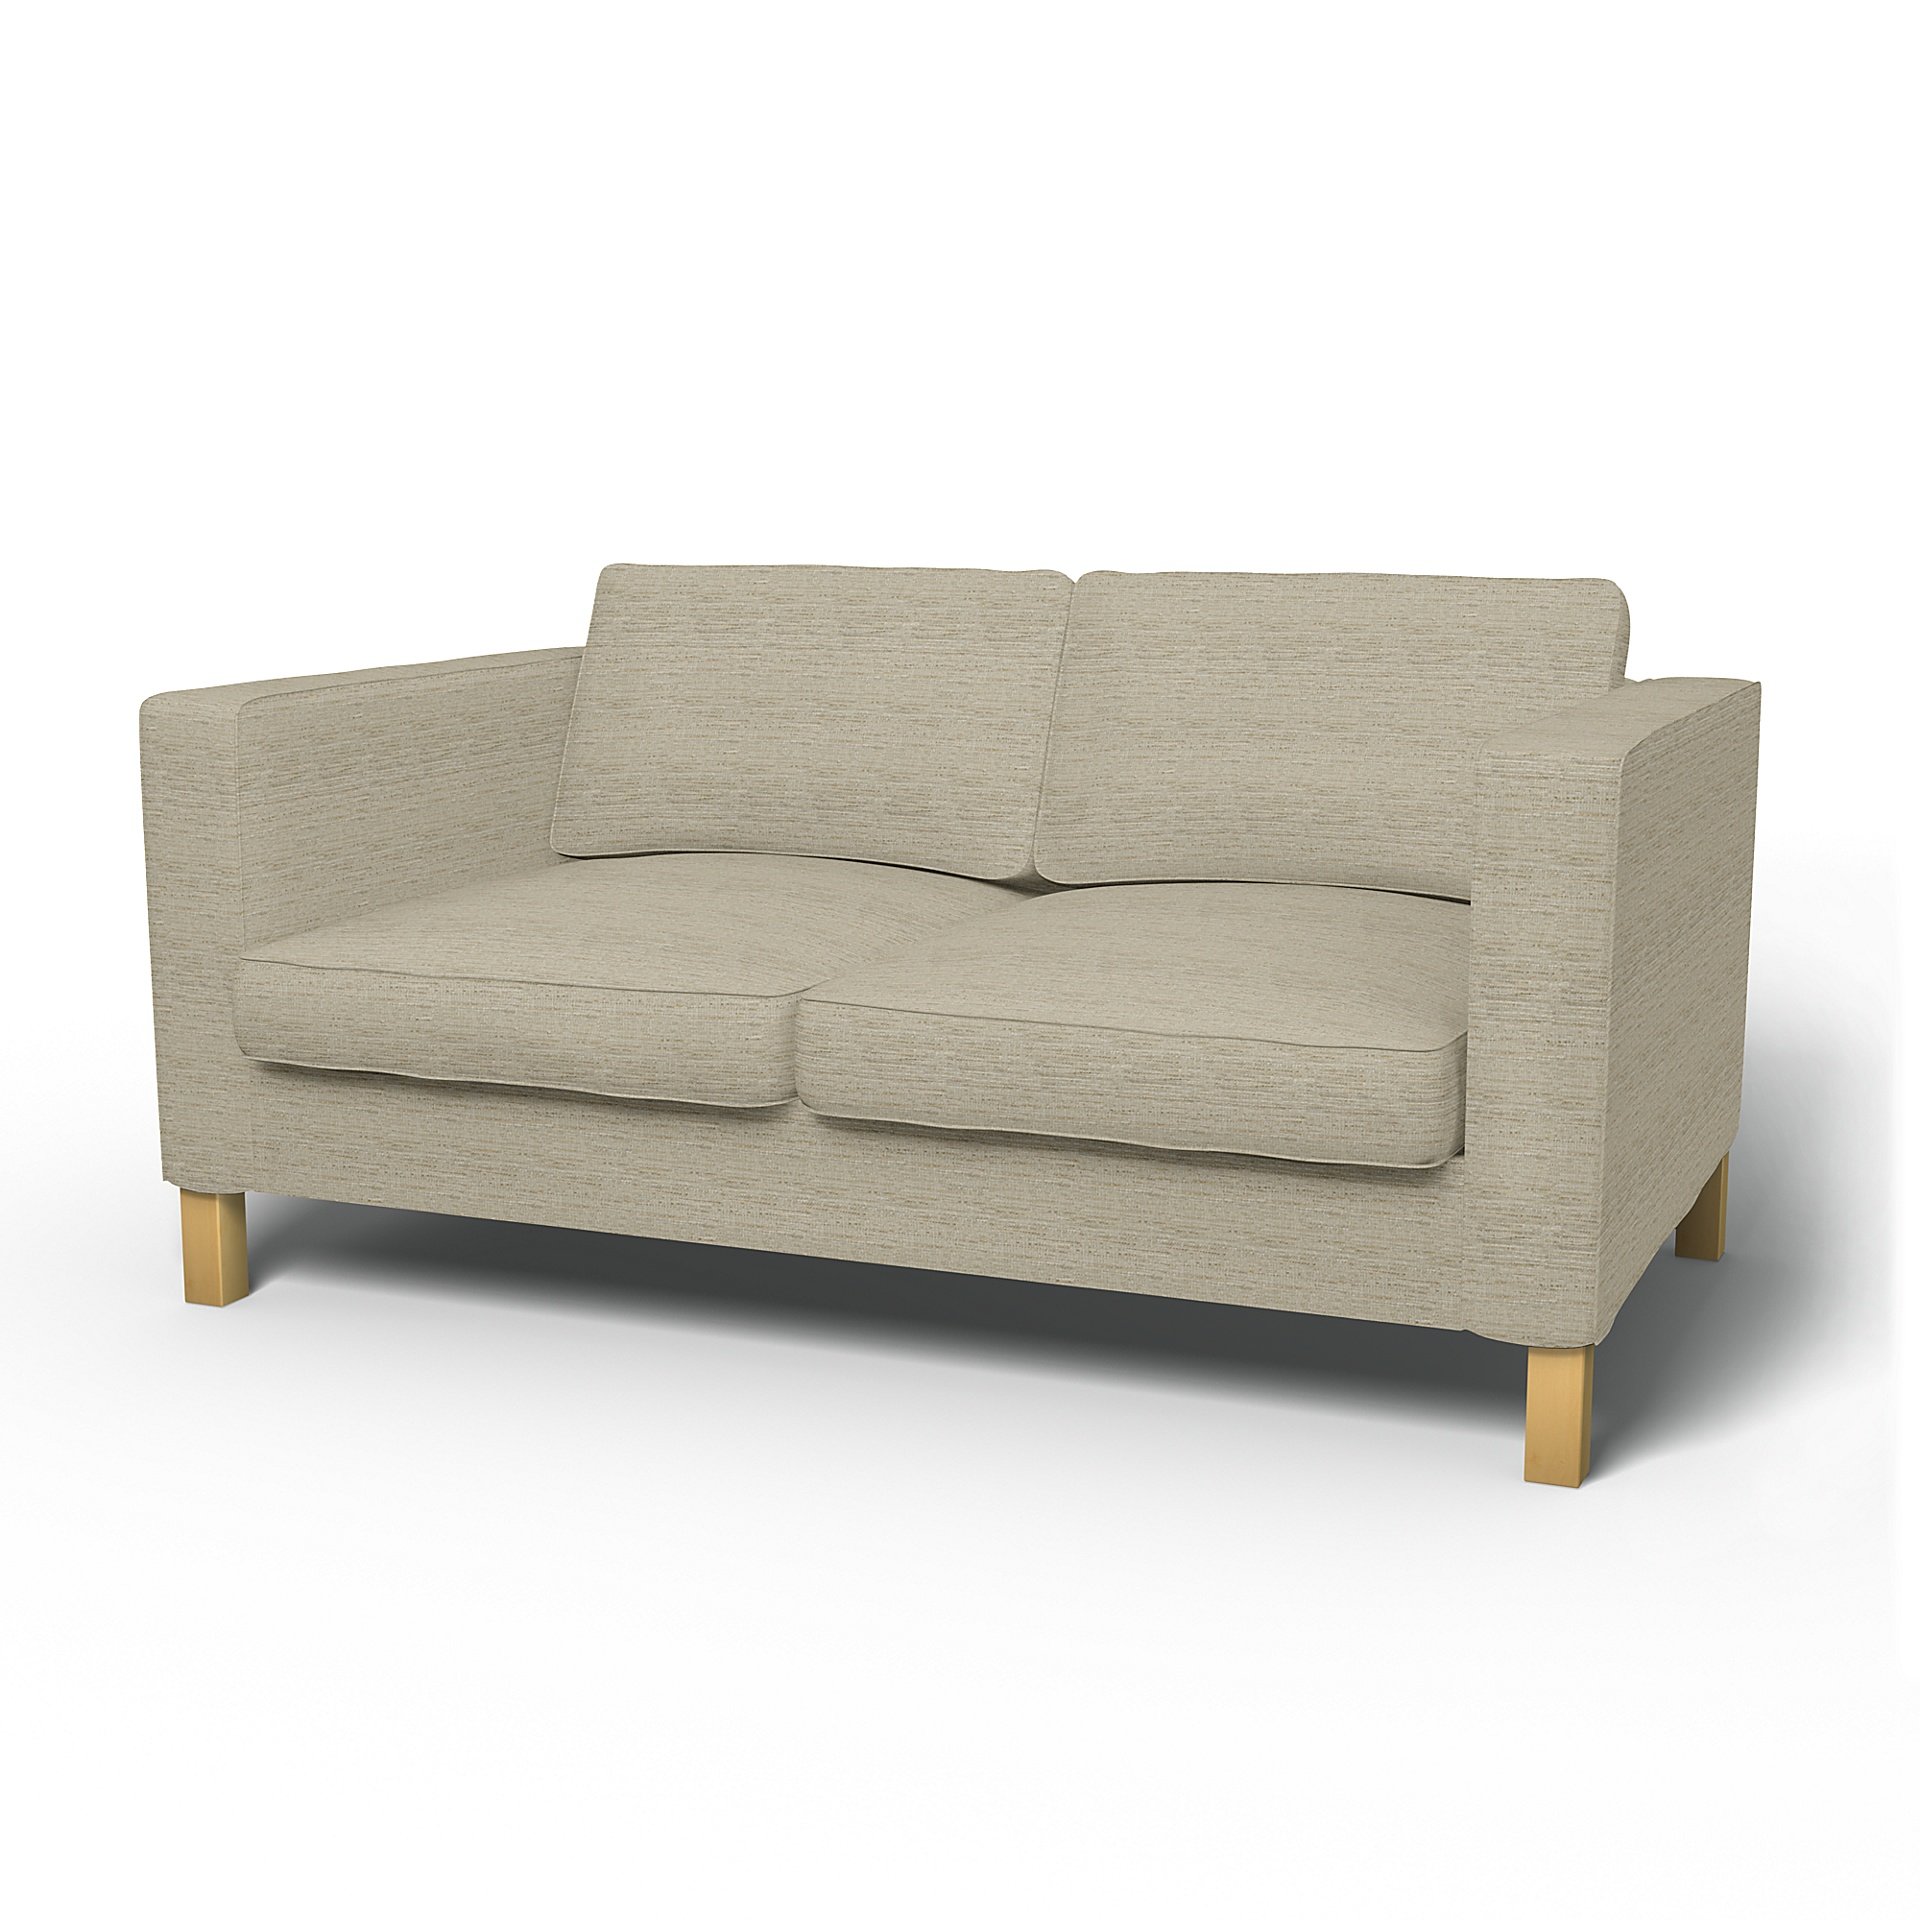 IKEA - Karlanda 2 Seater Sofa Cover, Light Sand, Boucle & Texture - Bemz